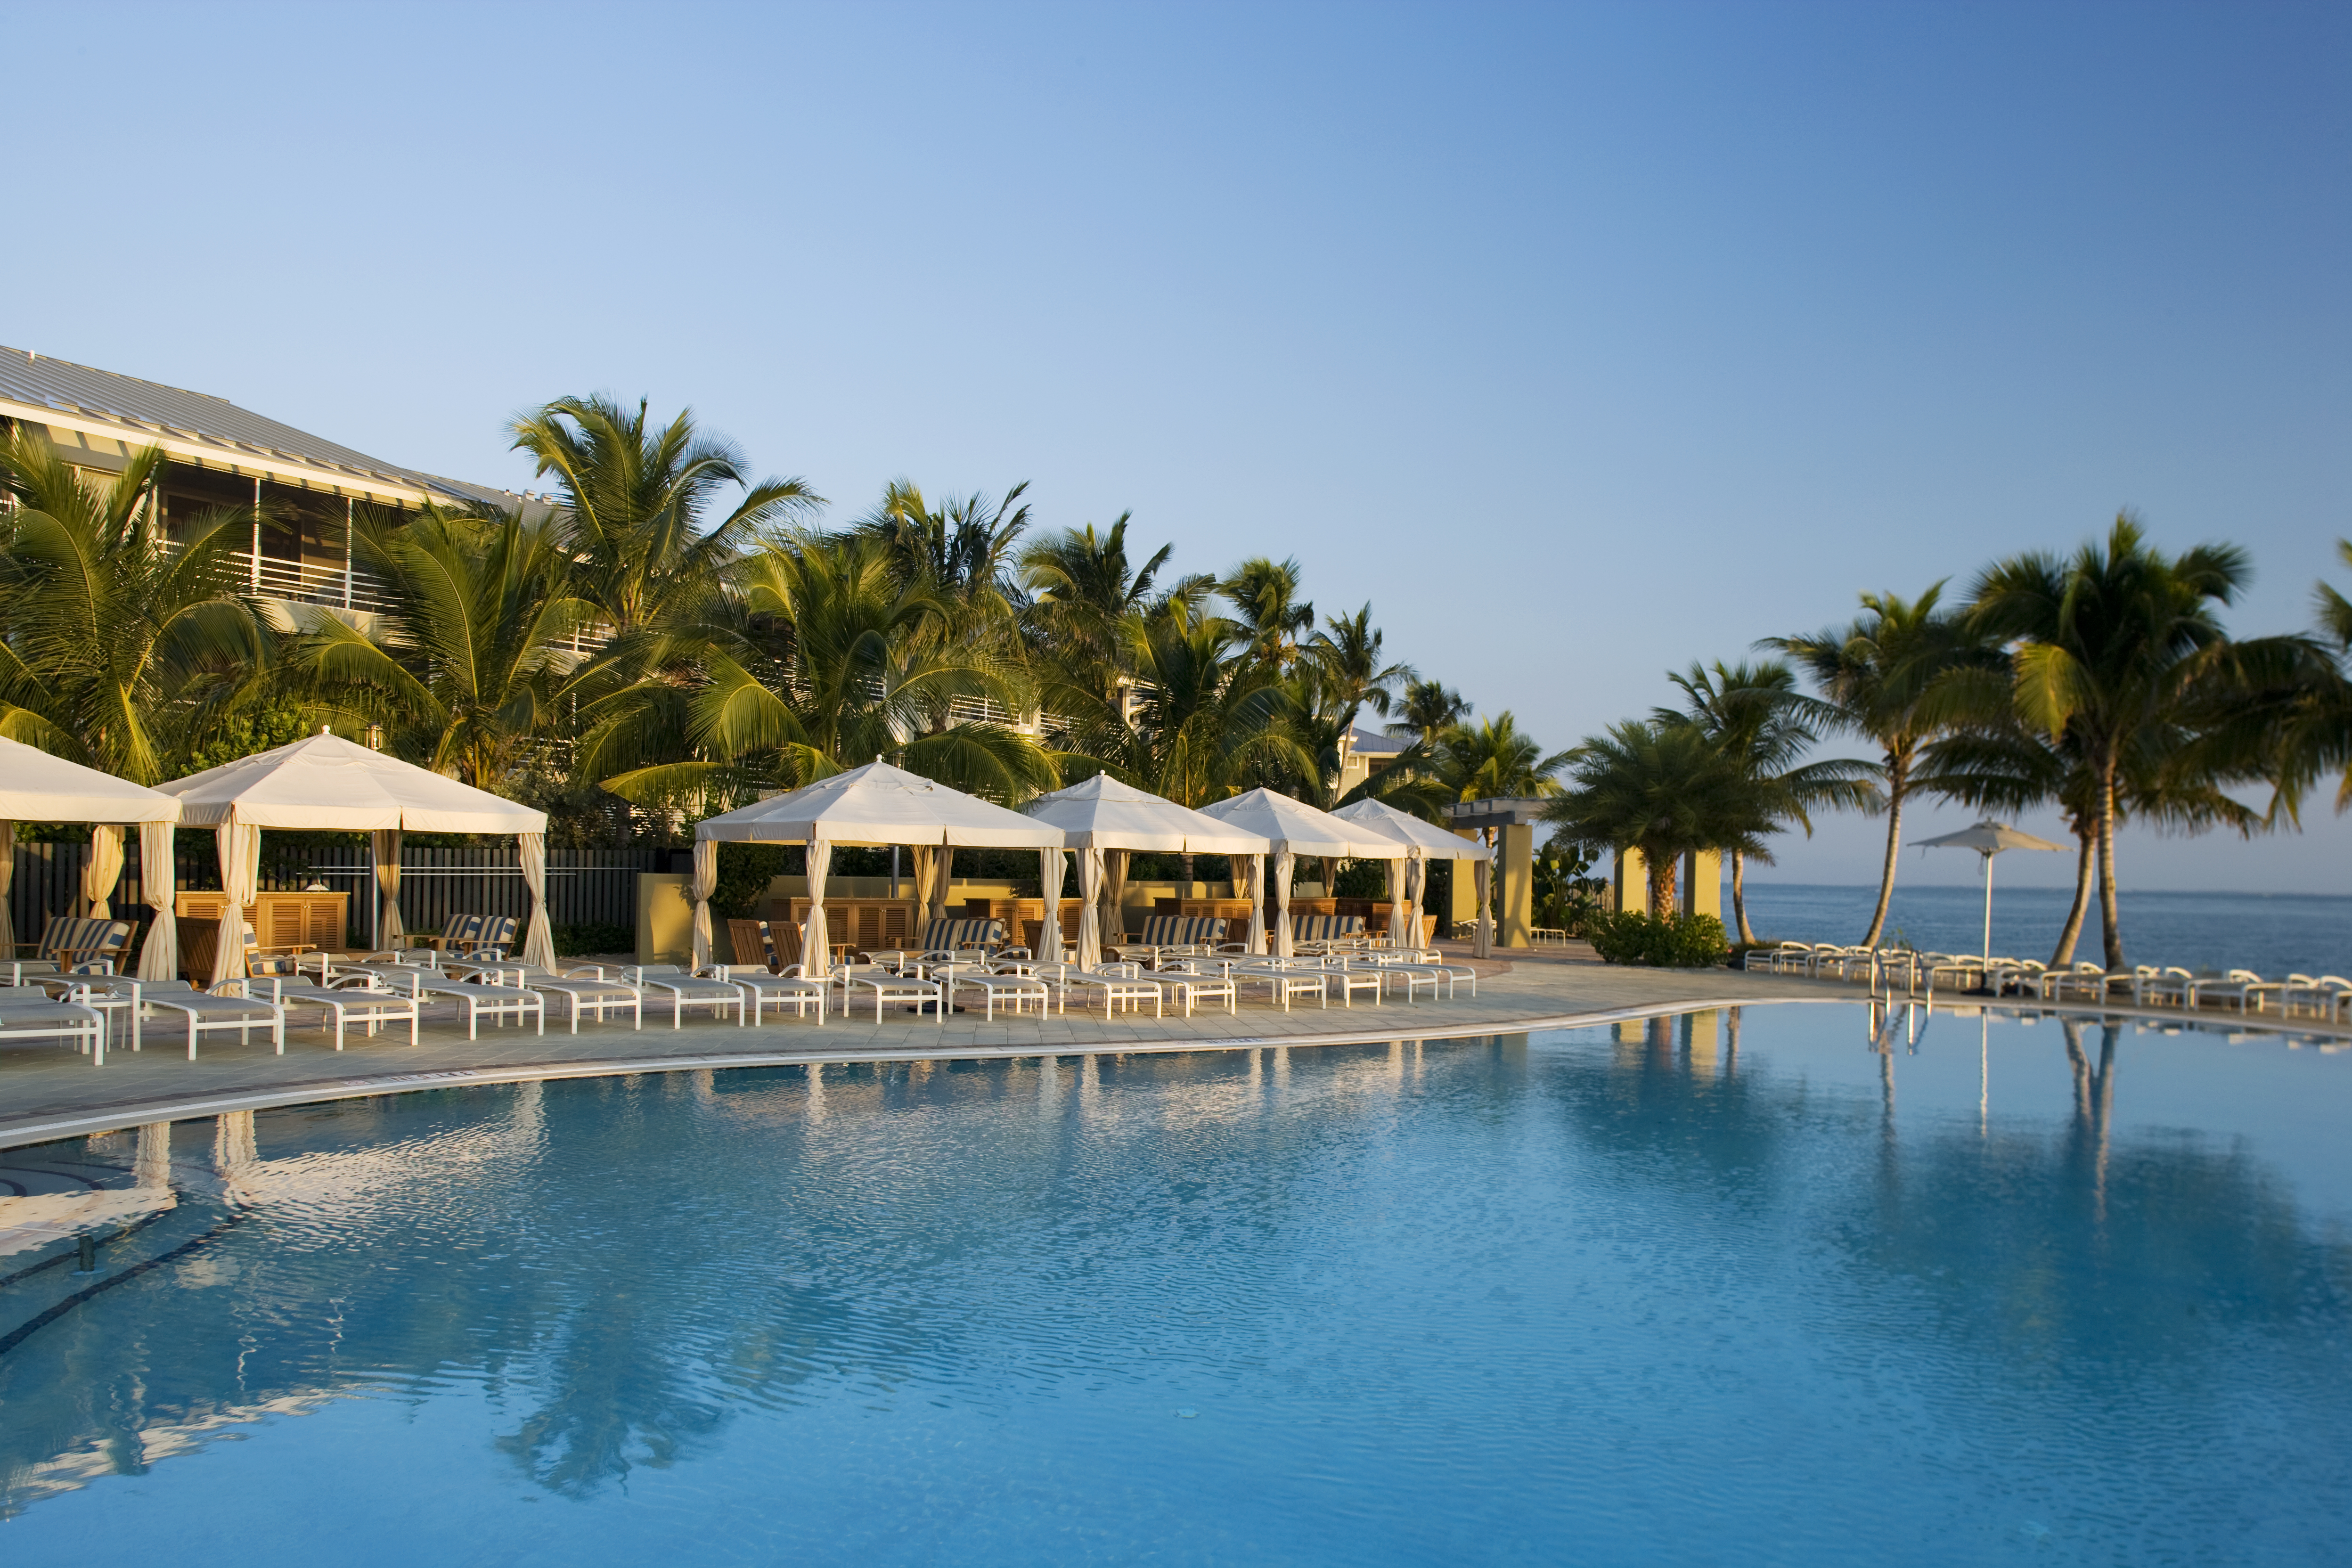 Romantic Hotels and Resorts in Florida | South Seas Island Resort